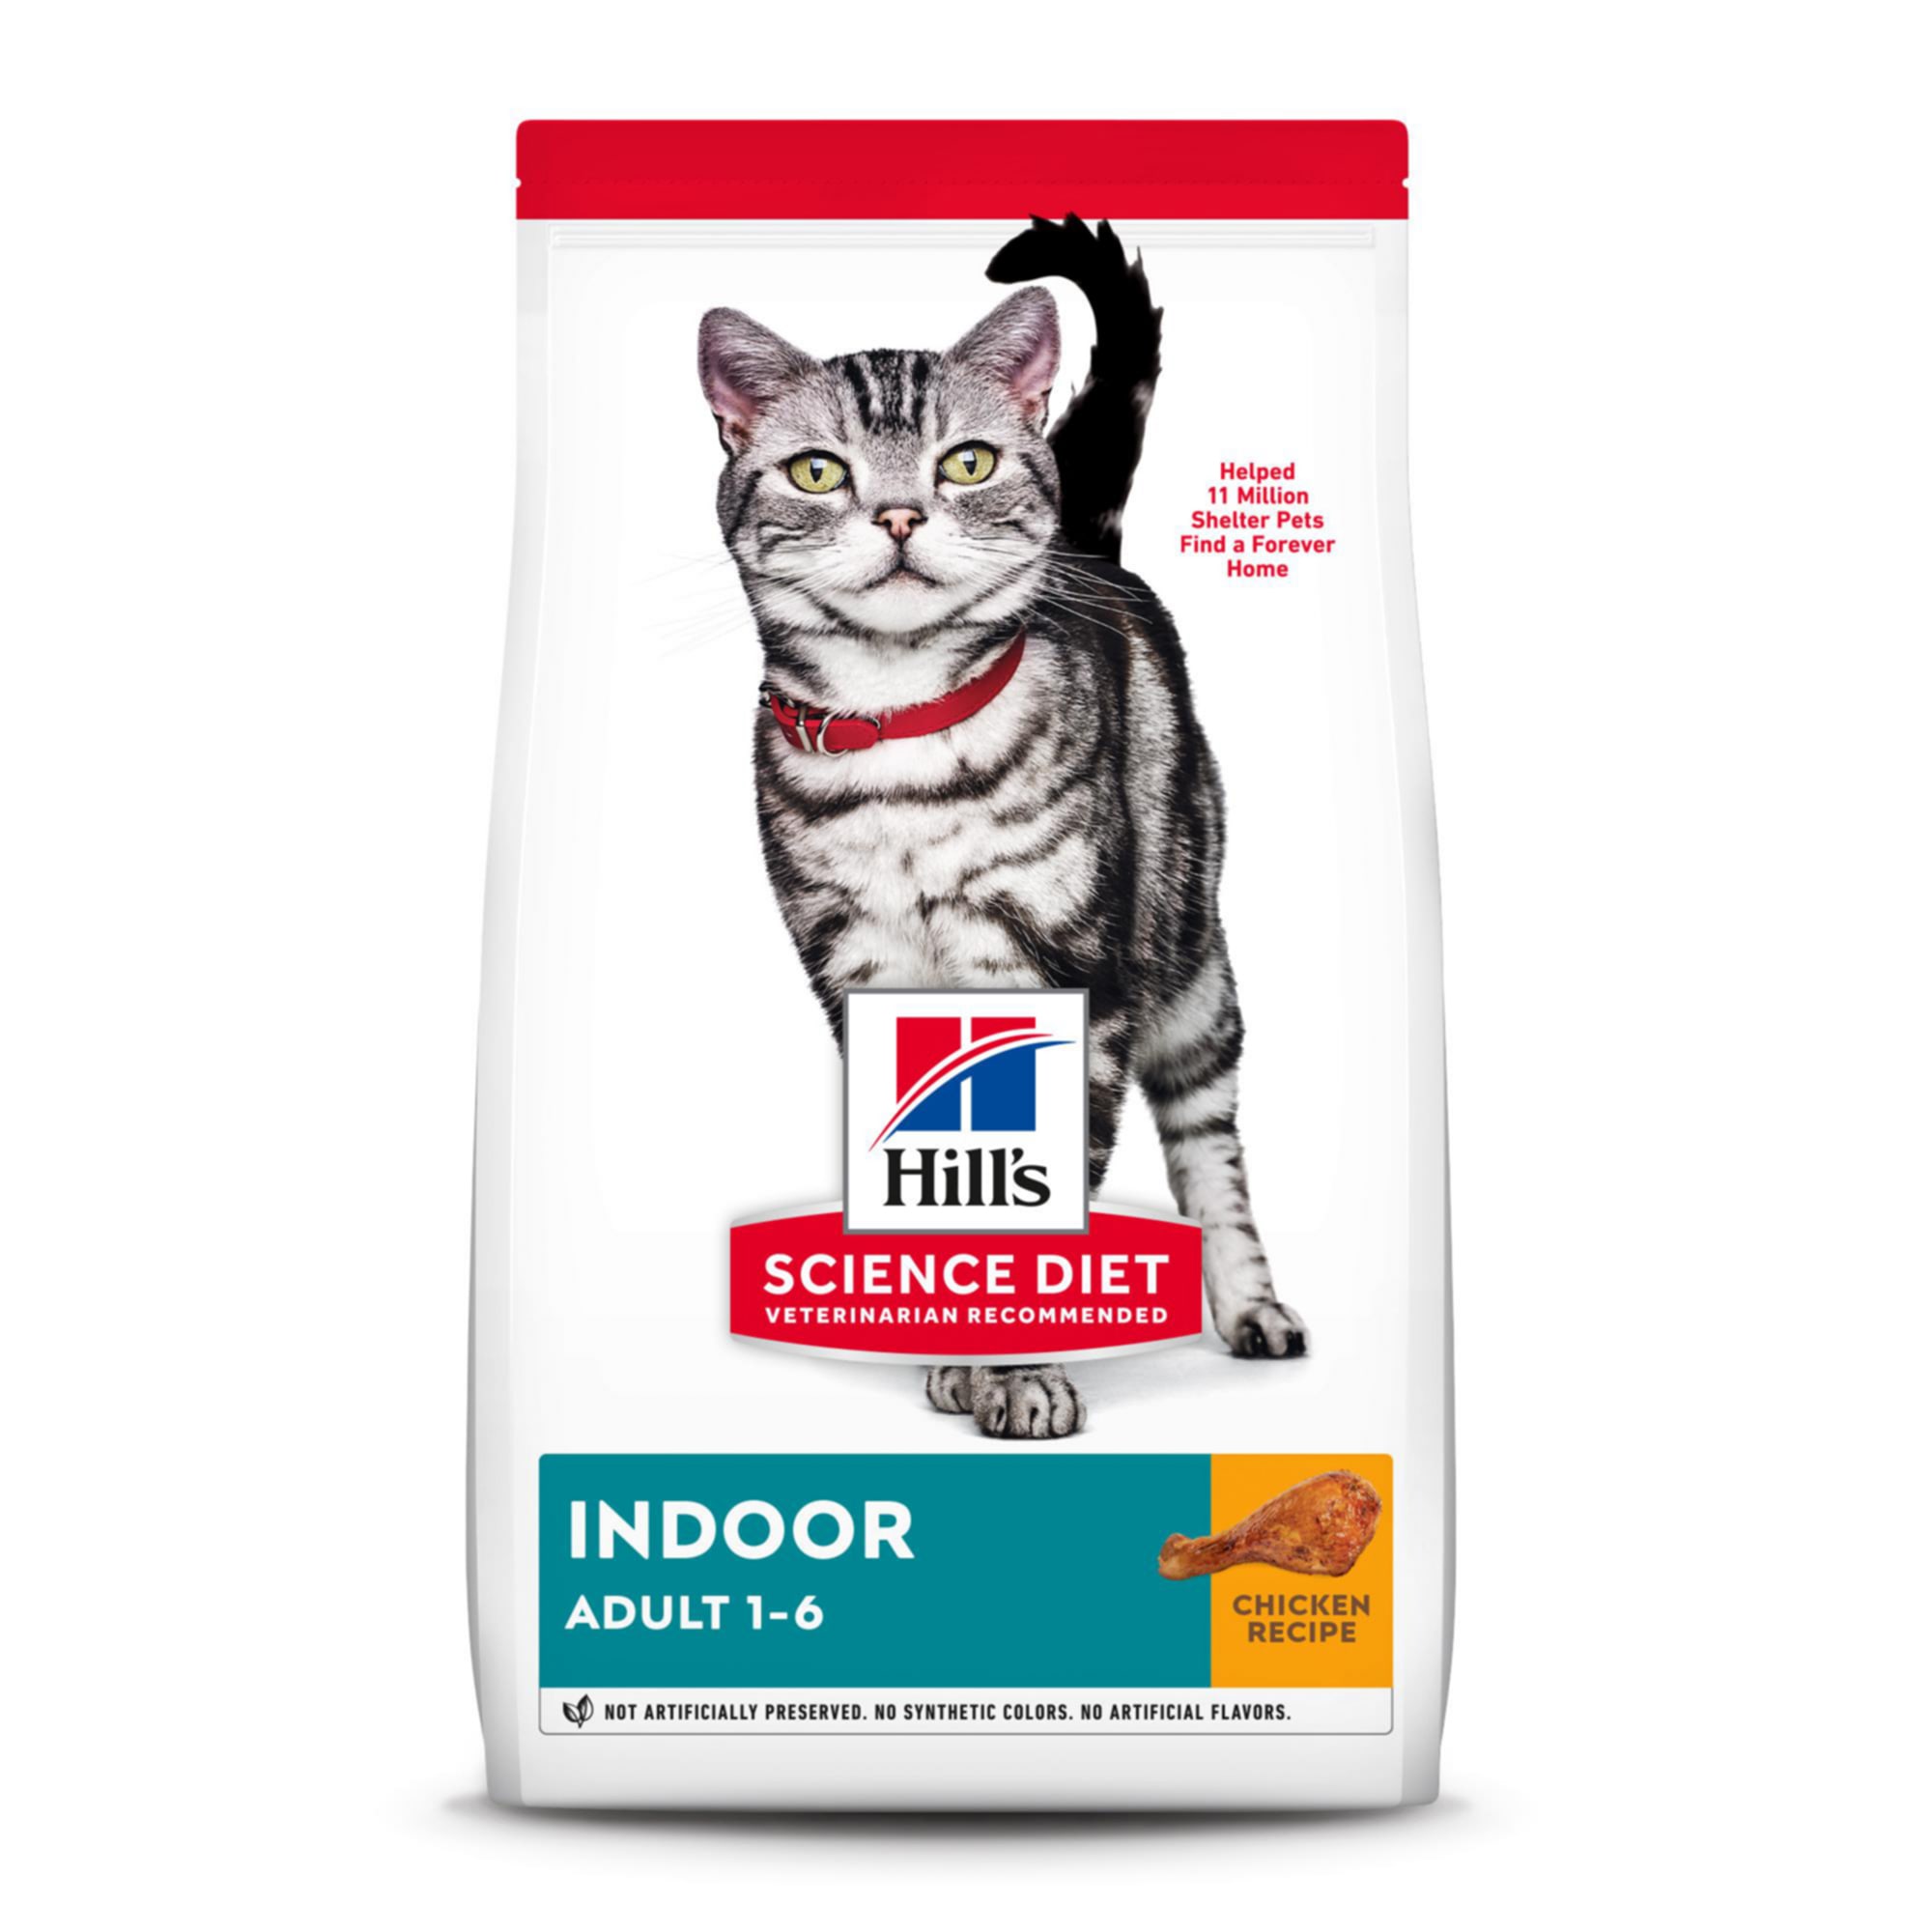 Hill's Science Diet Adult Indoor Chicken Recipe Dry Cat Food, 15.5 lbs